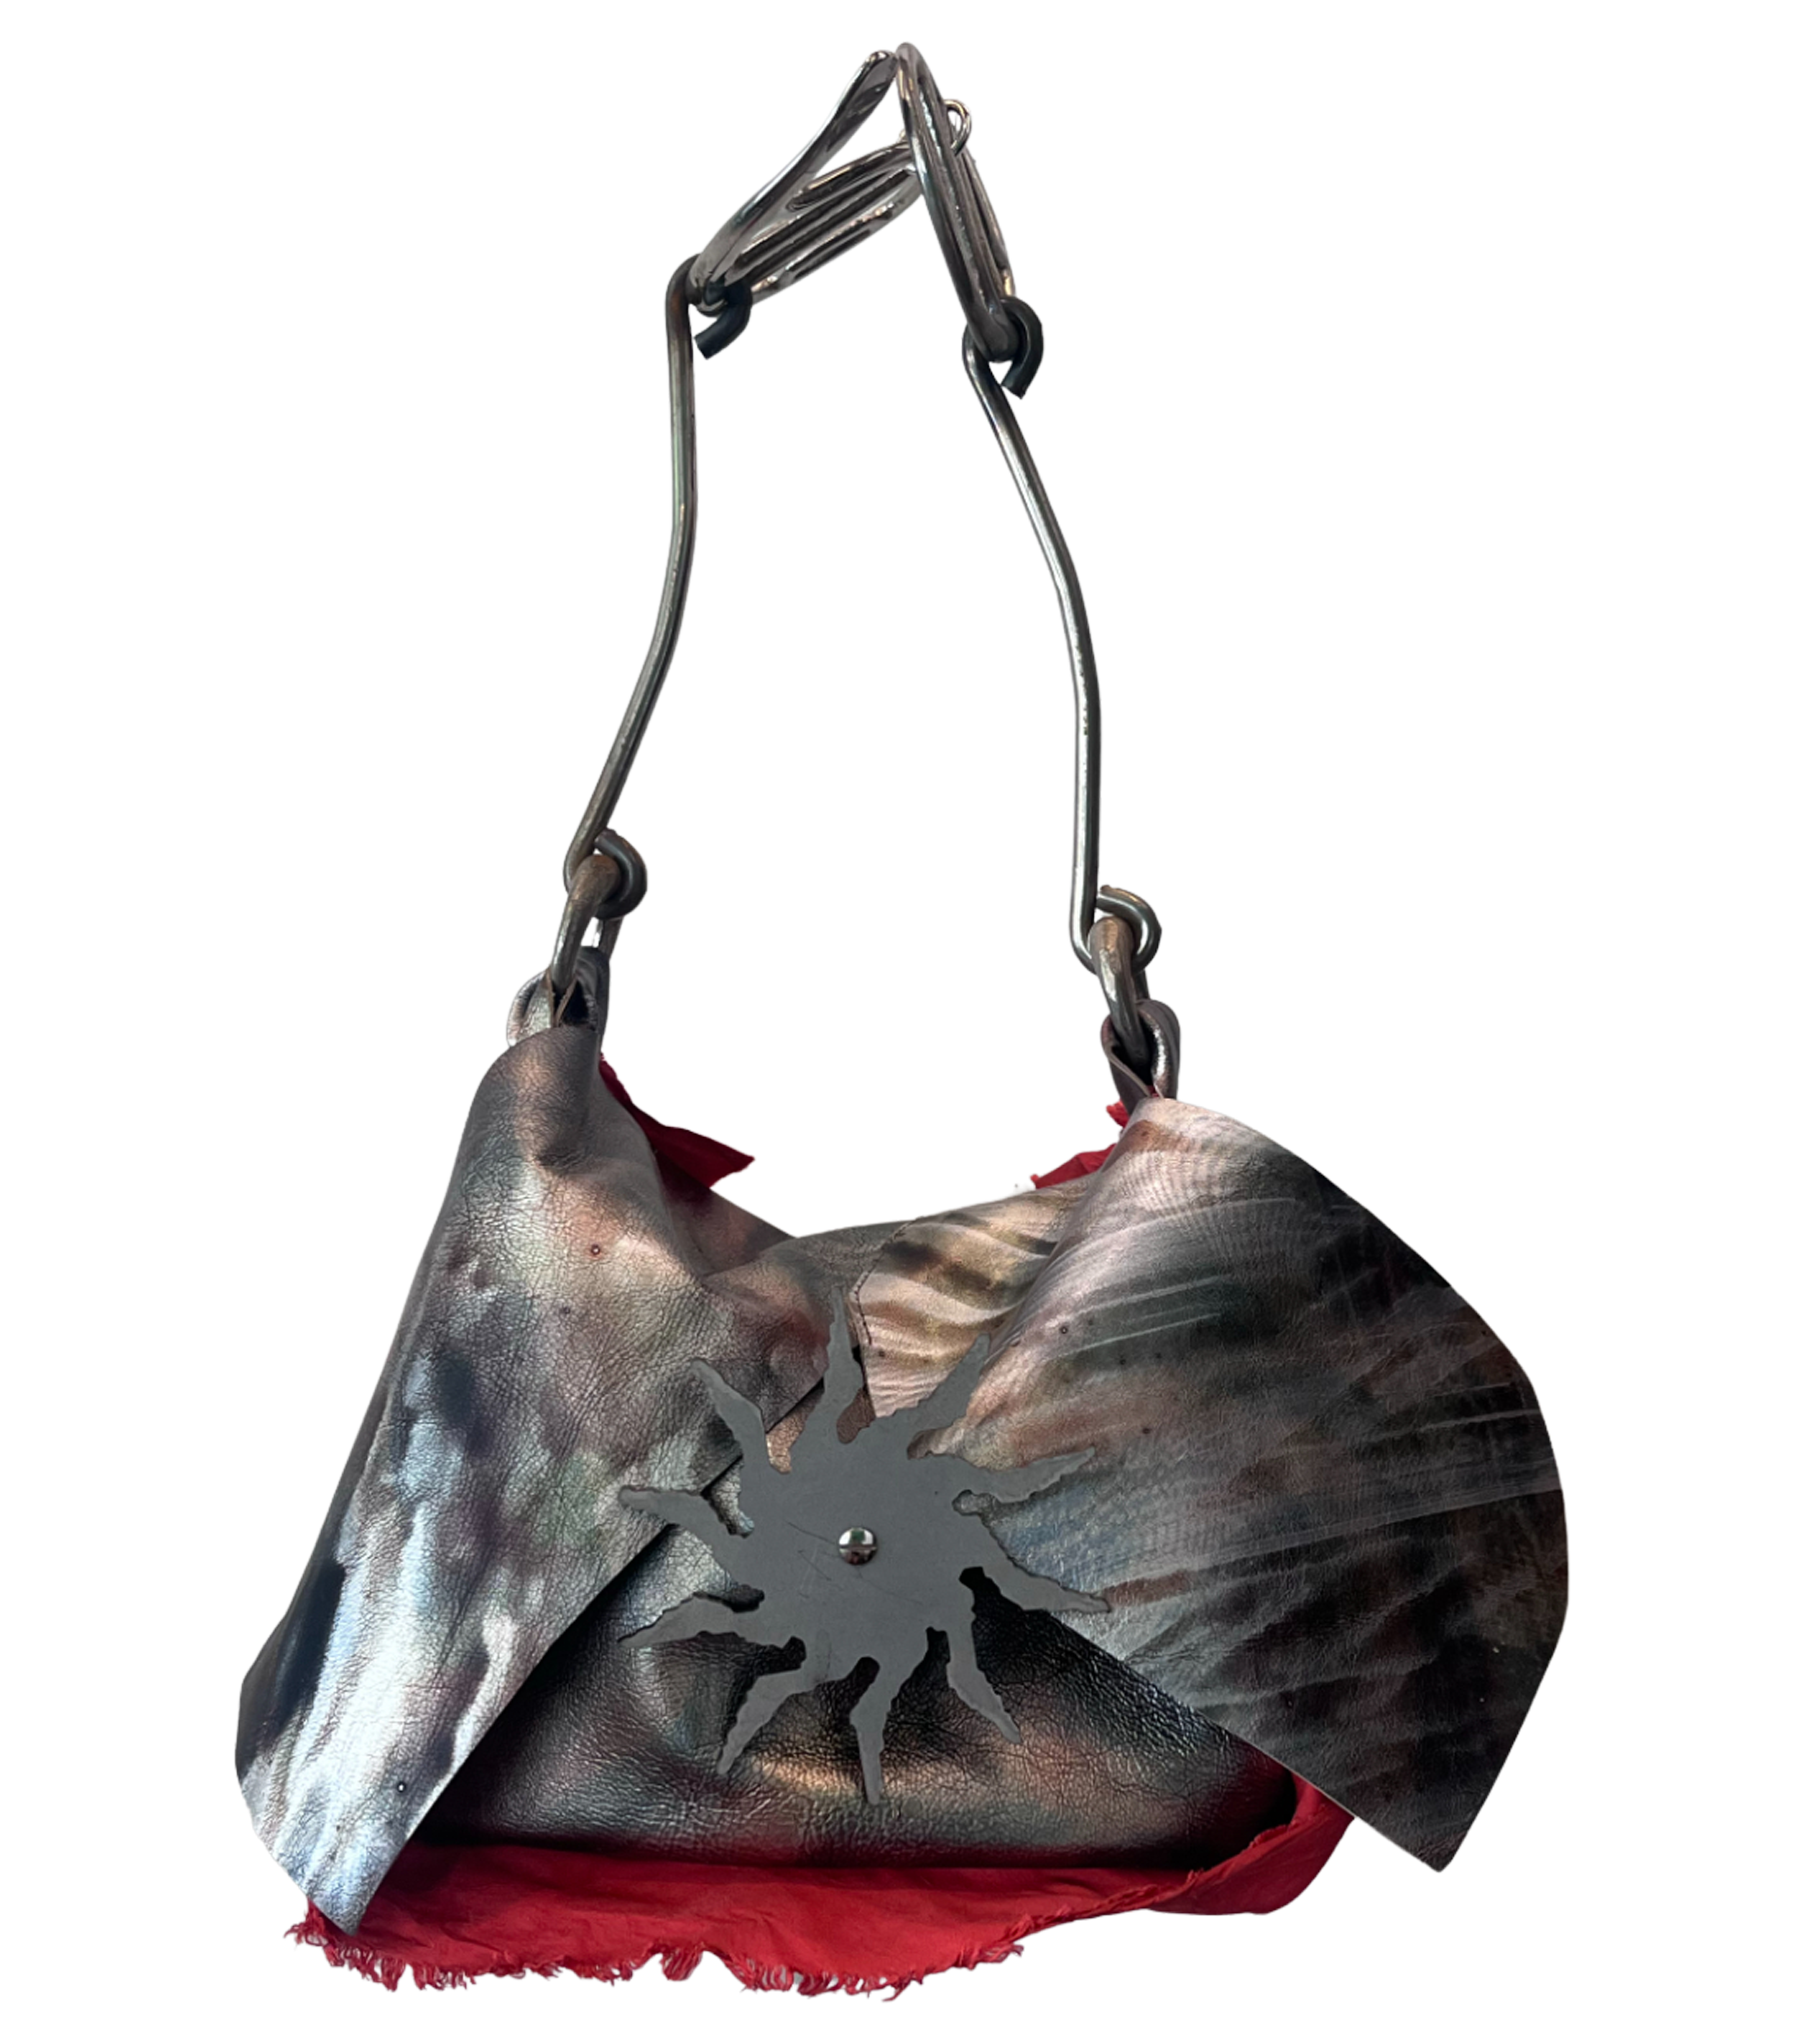 Manola's Bag in Metalic Paint